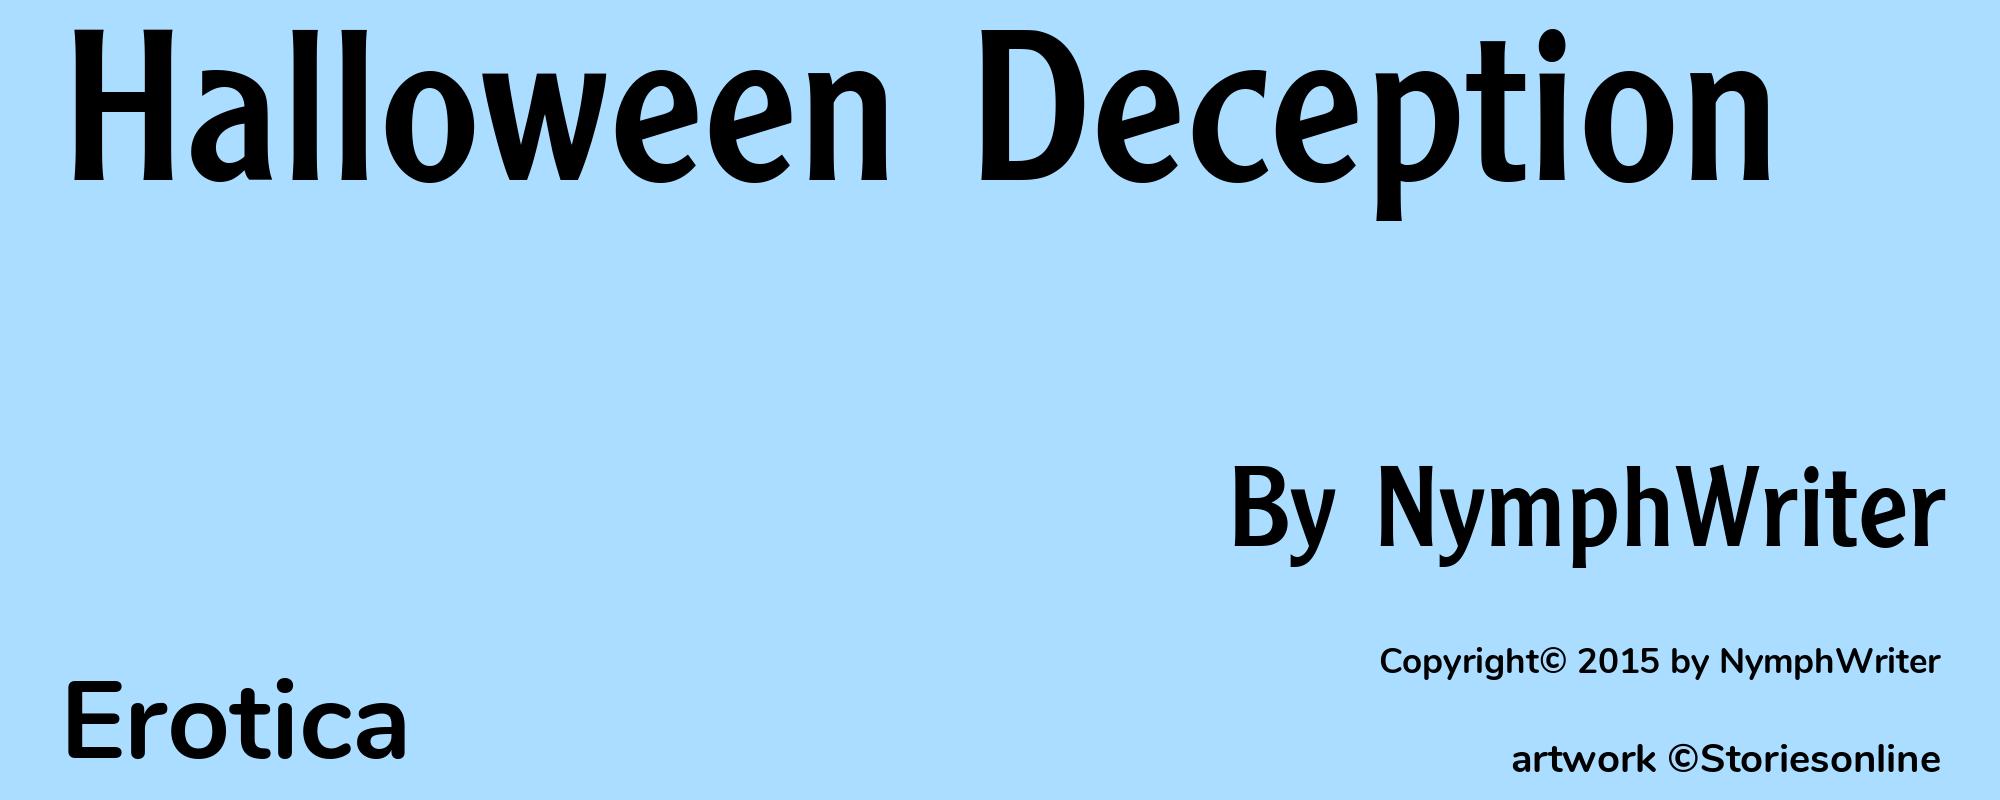 Halloween Deception - Cover